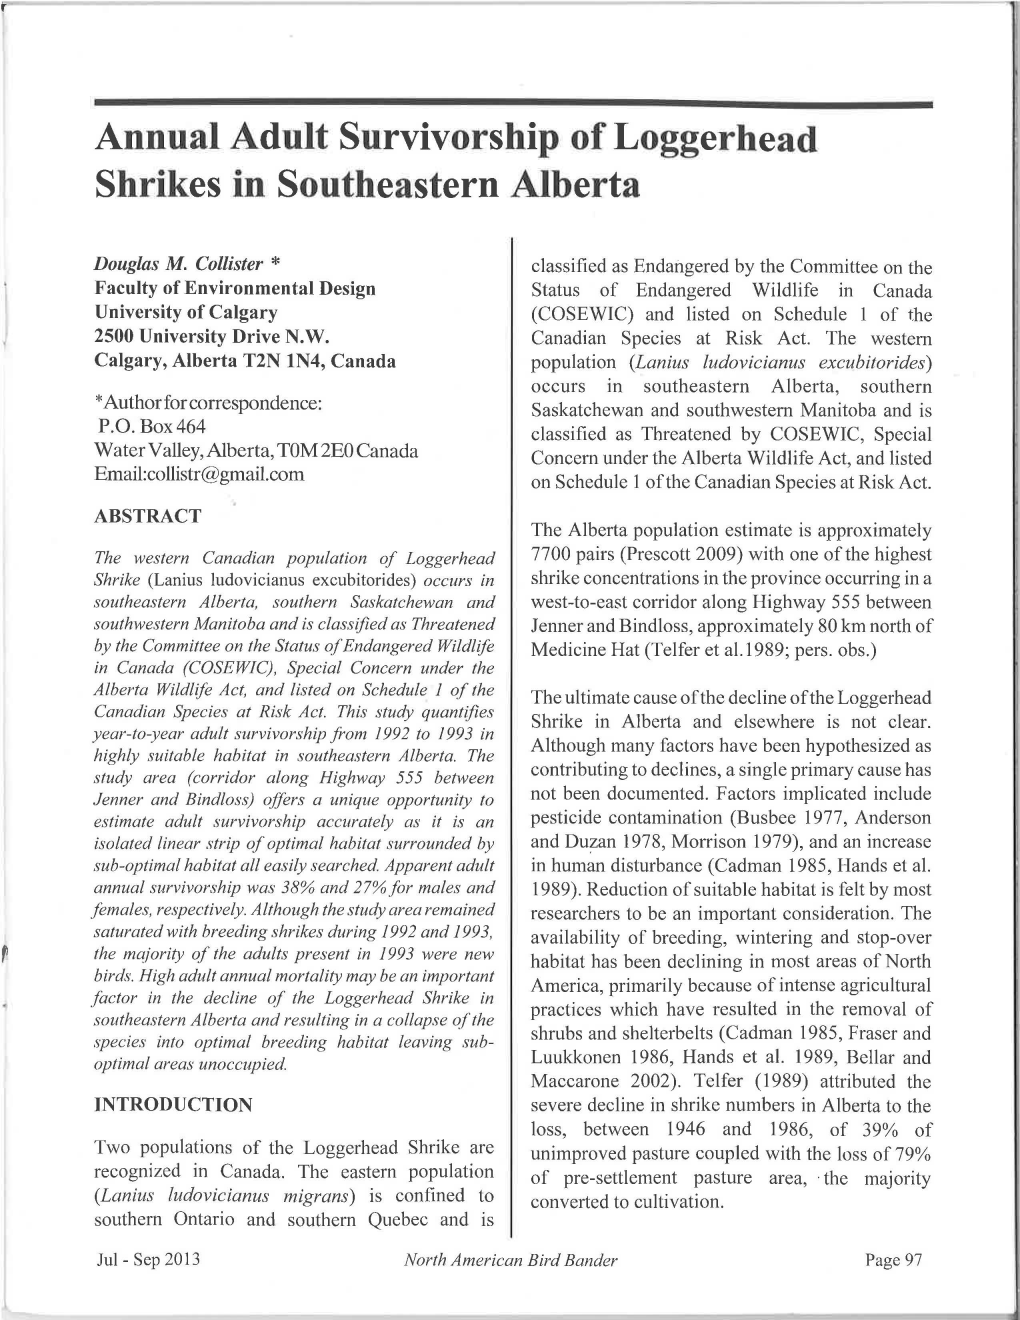 Annual Adult Survivorship of Loggerhead Shrikes in Southeastern Alberta